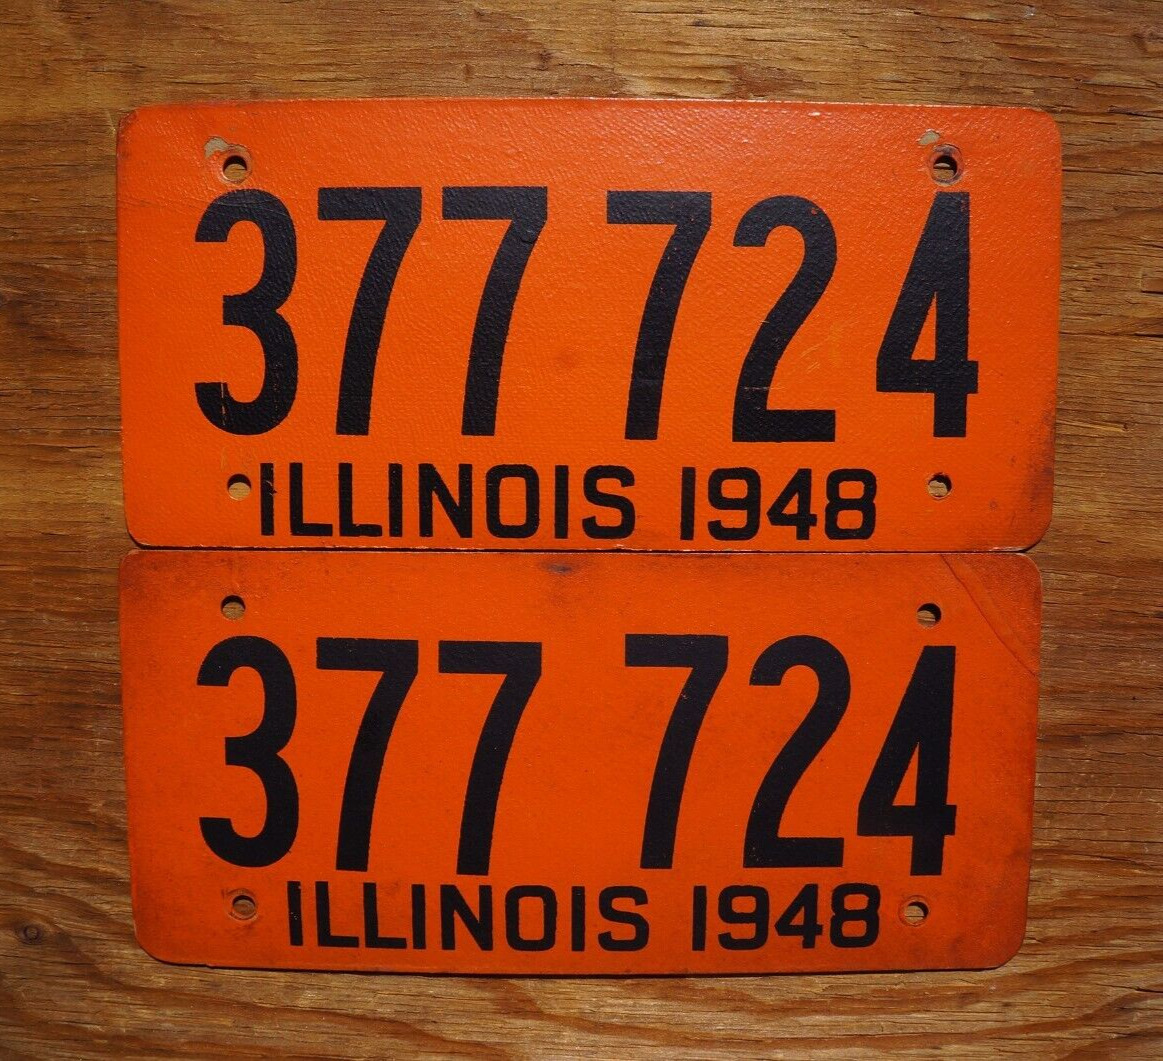 1948 ILLINOIS License Plate Plates PAIR / SET # 377 724